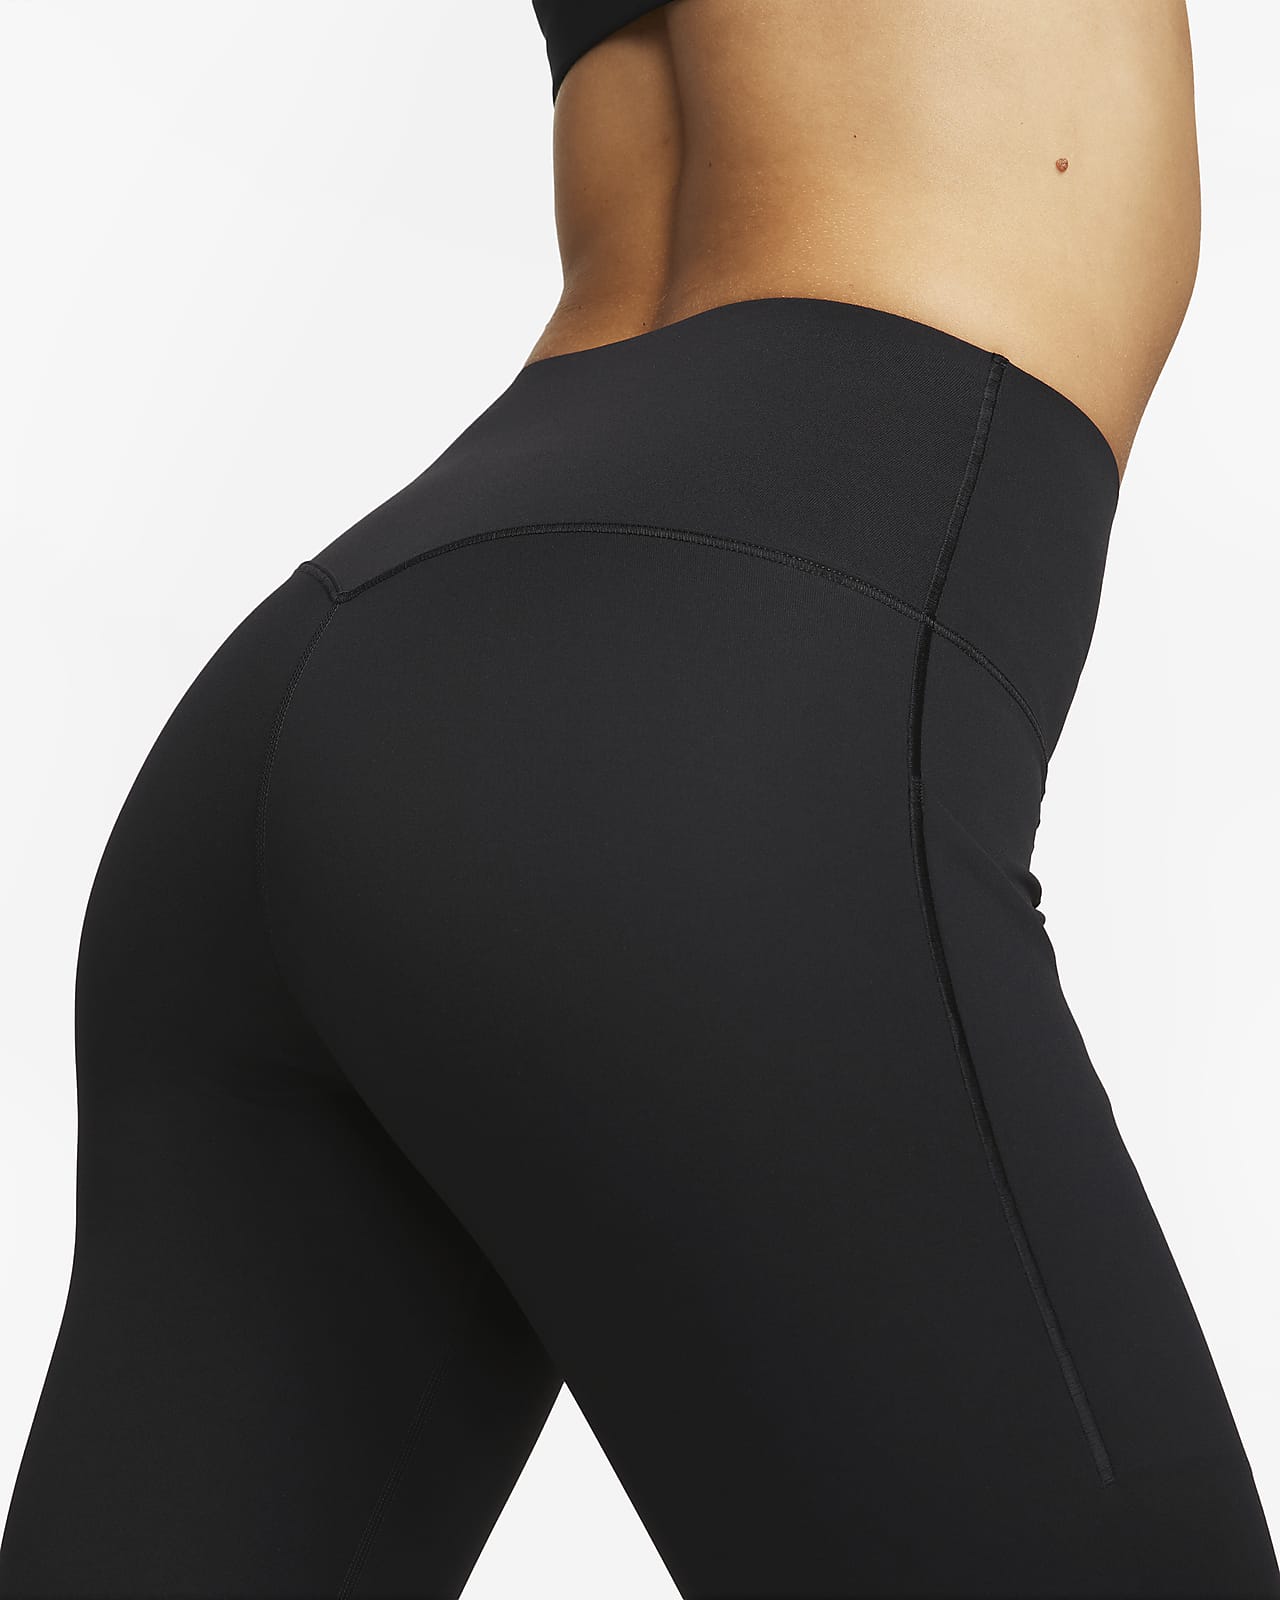 Golds Gym Leggings Womens Extra Large Black Athleisure Capri Training Pants